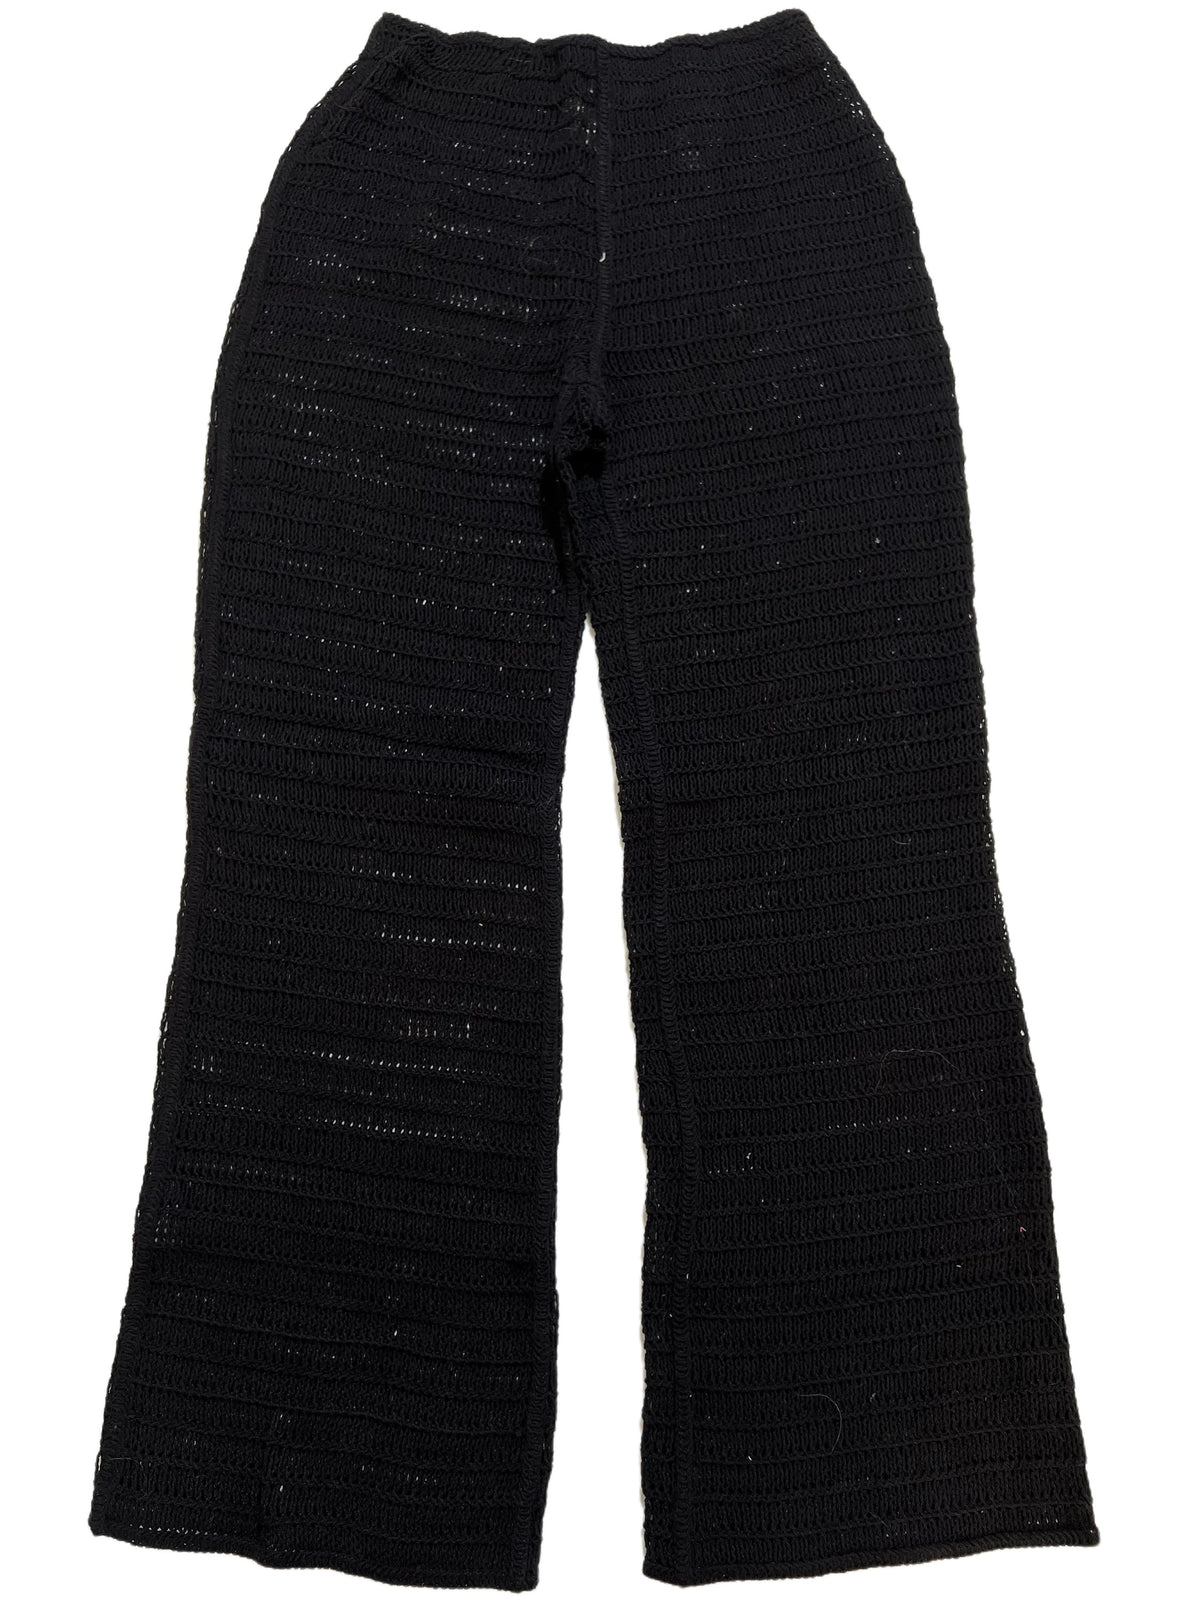 H&M- Black Crochet Pants